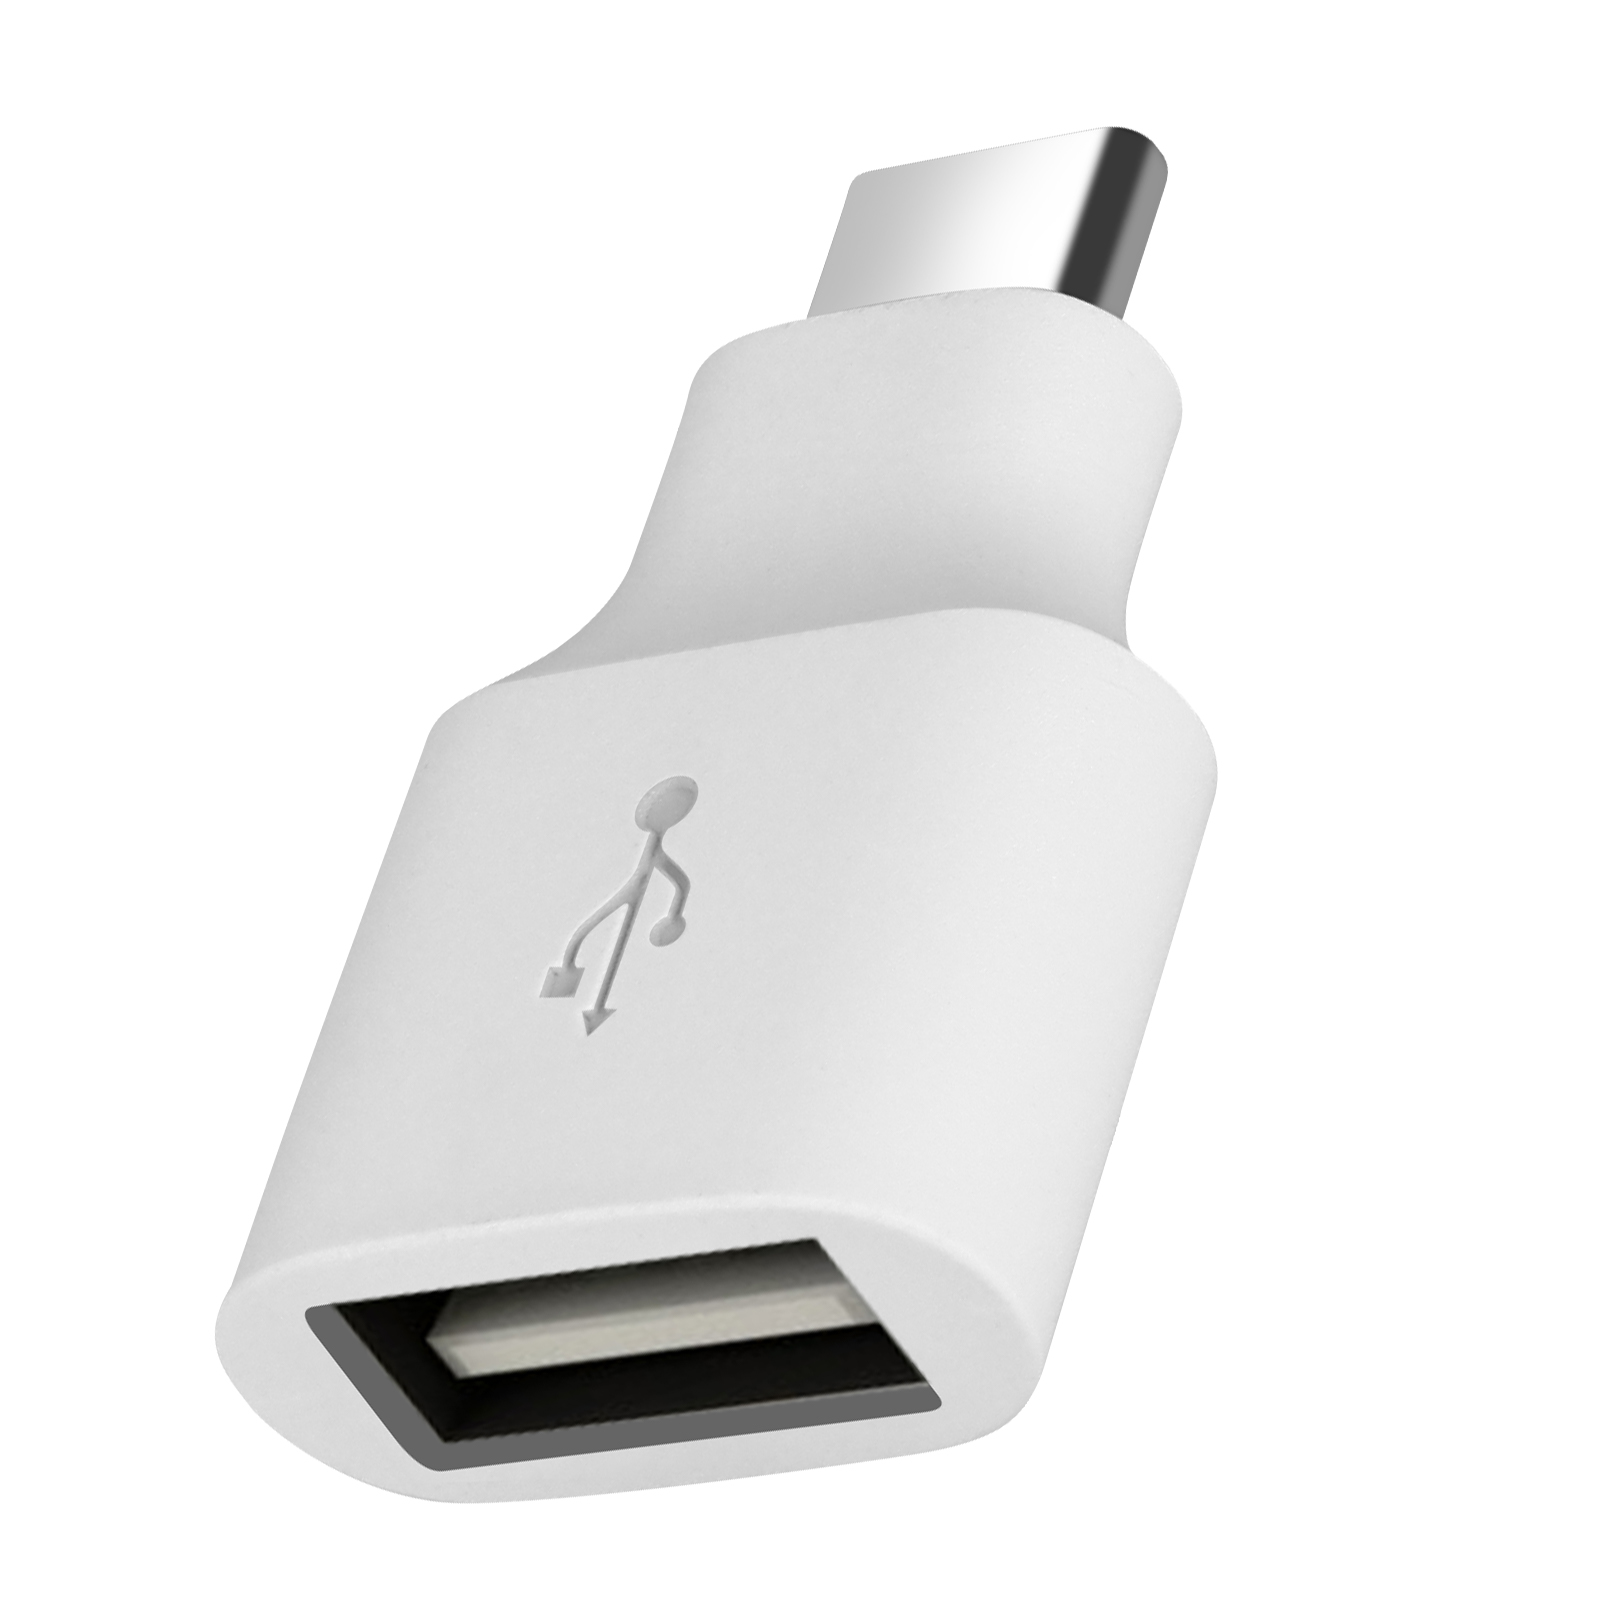 USB-C Weiß Google, Buchse USB-Adapter USB auf GOOGLE Stecker